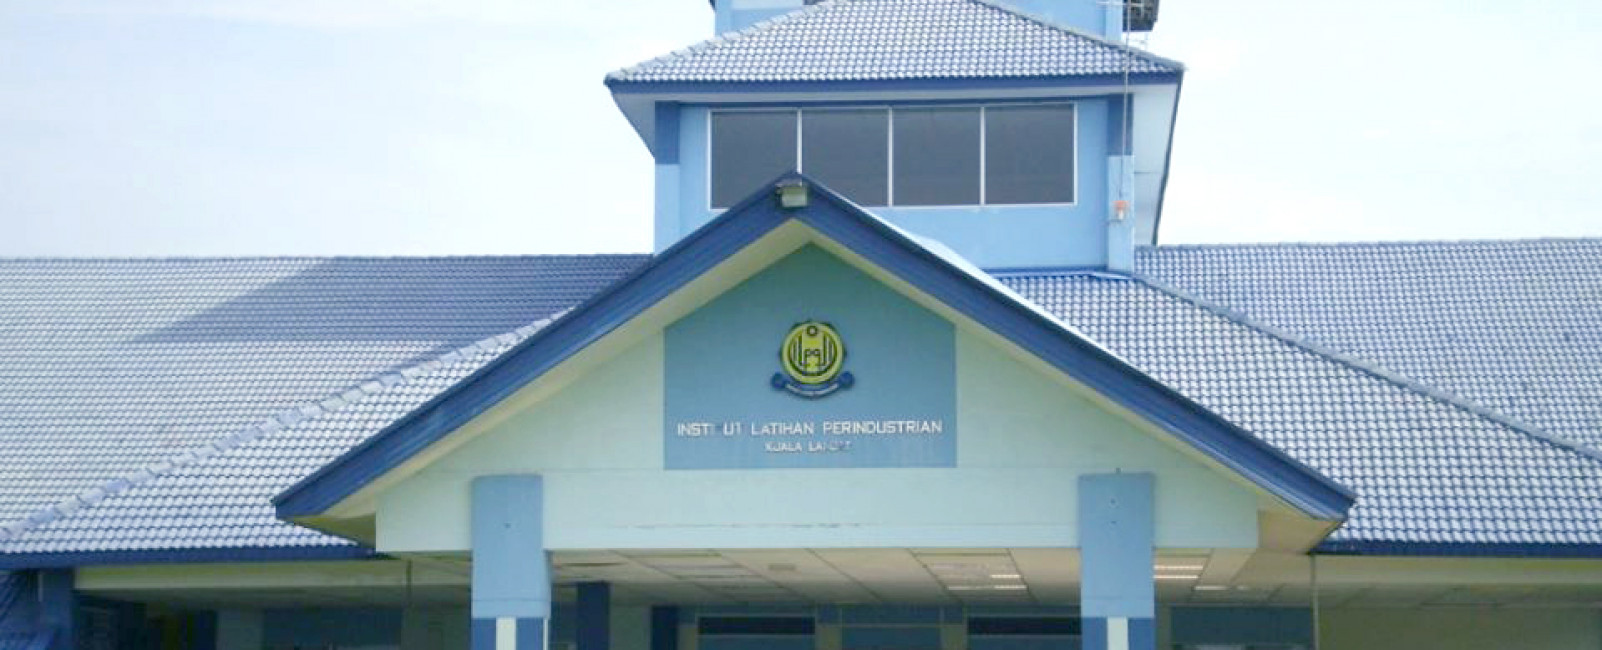 Institut Latihan Perindustrian Kuala Langat | MyCompass